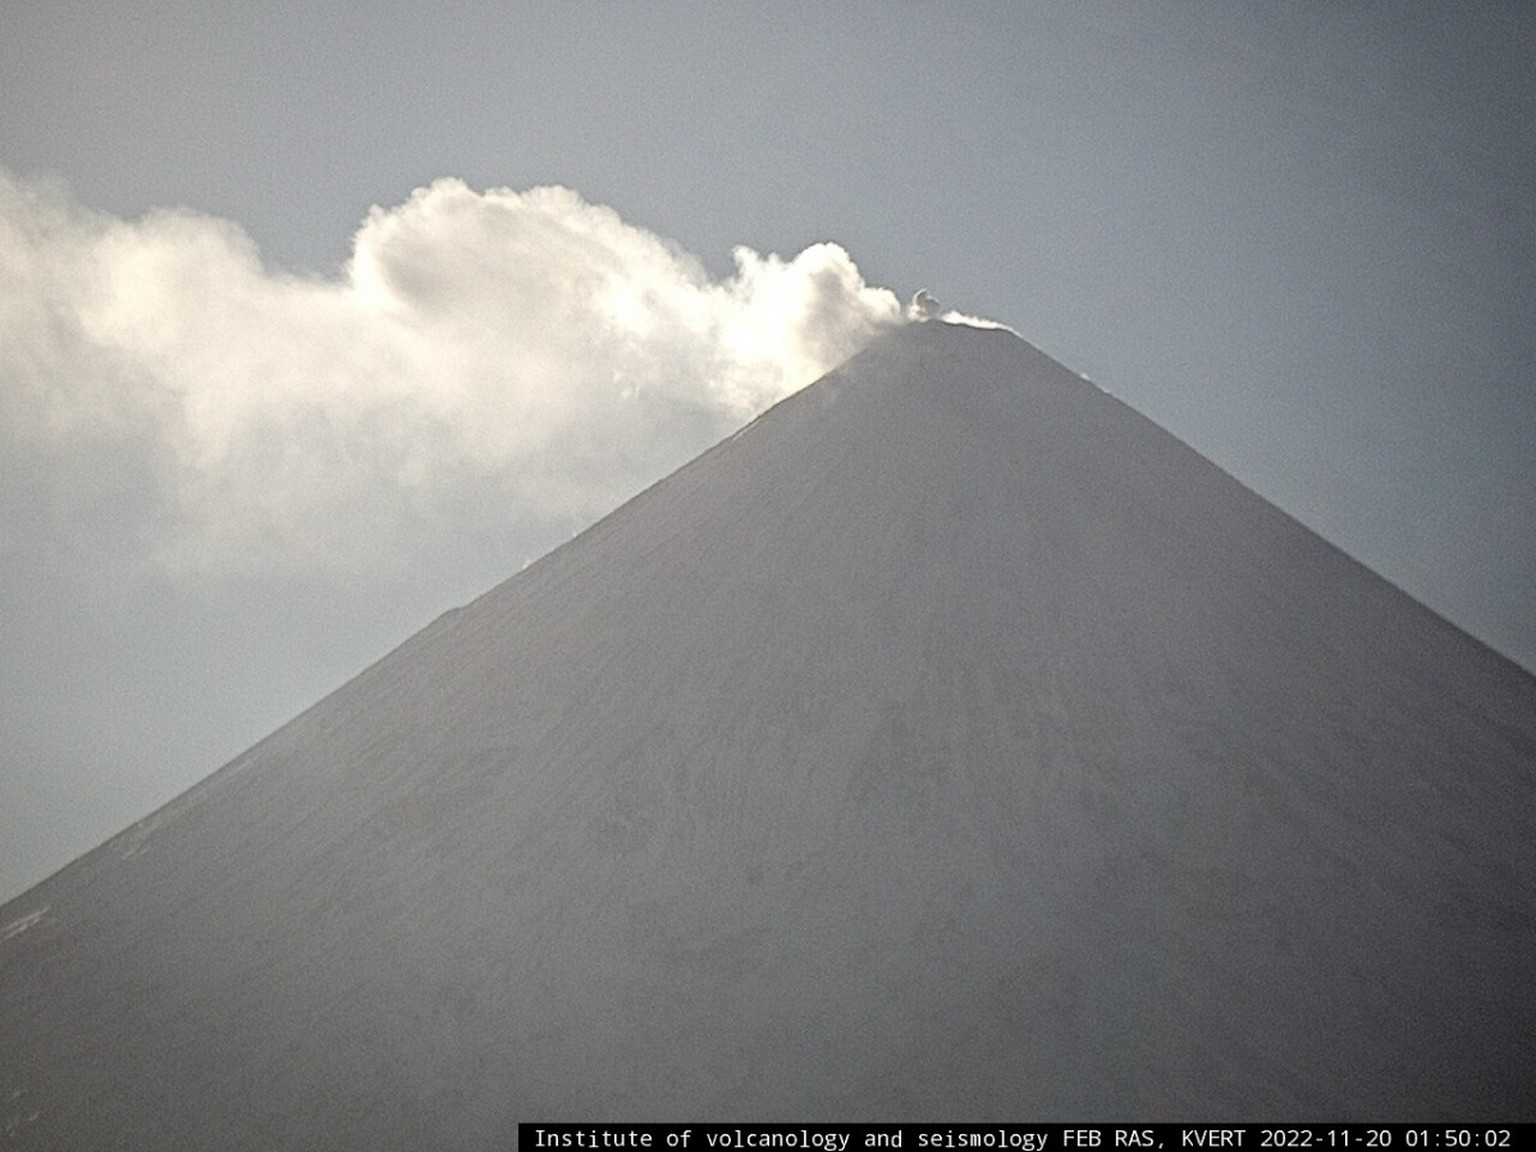 The Strombolian and fumalolic activity of Klyuchevskoy volcano on 20 November, 2022.
http://www.kscnet.ru/ivs/kvert/index?lang=en